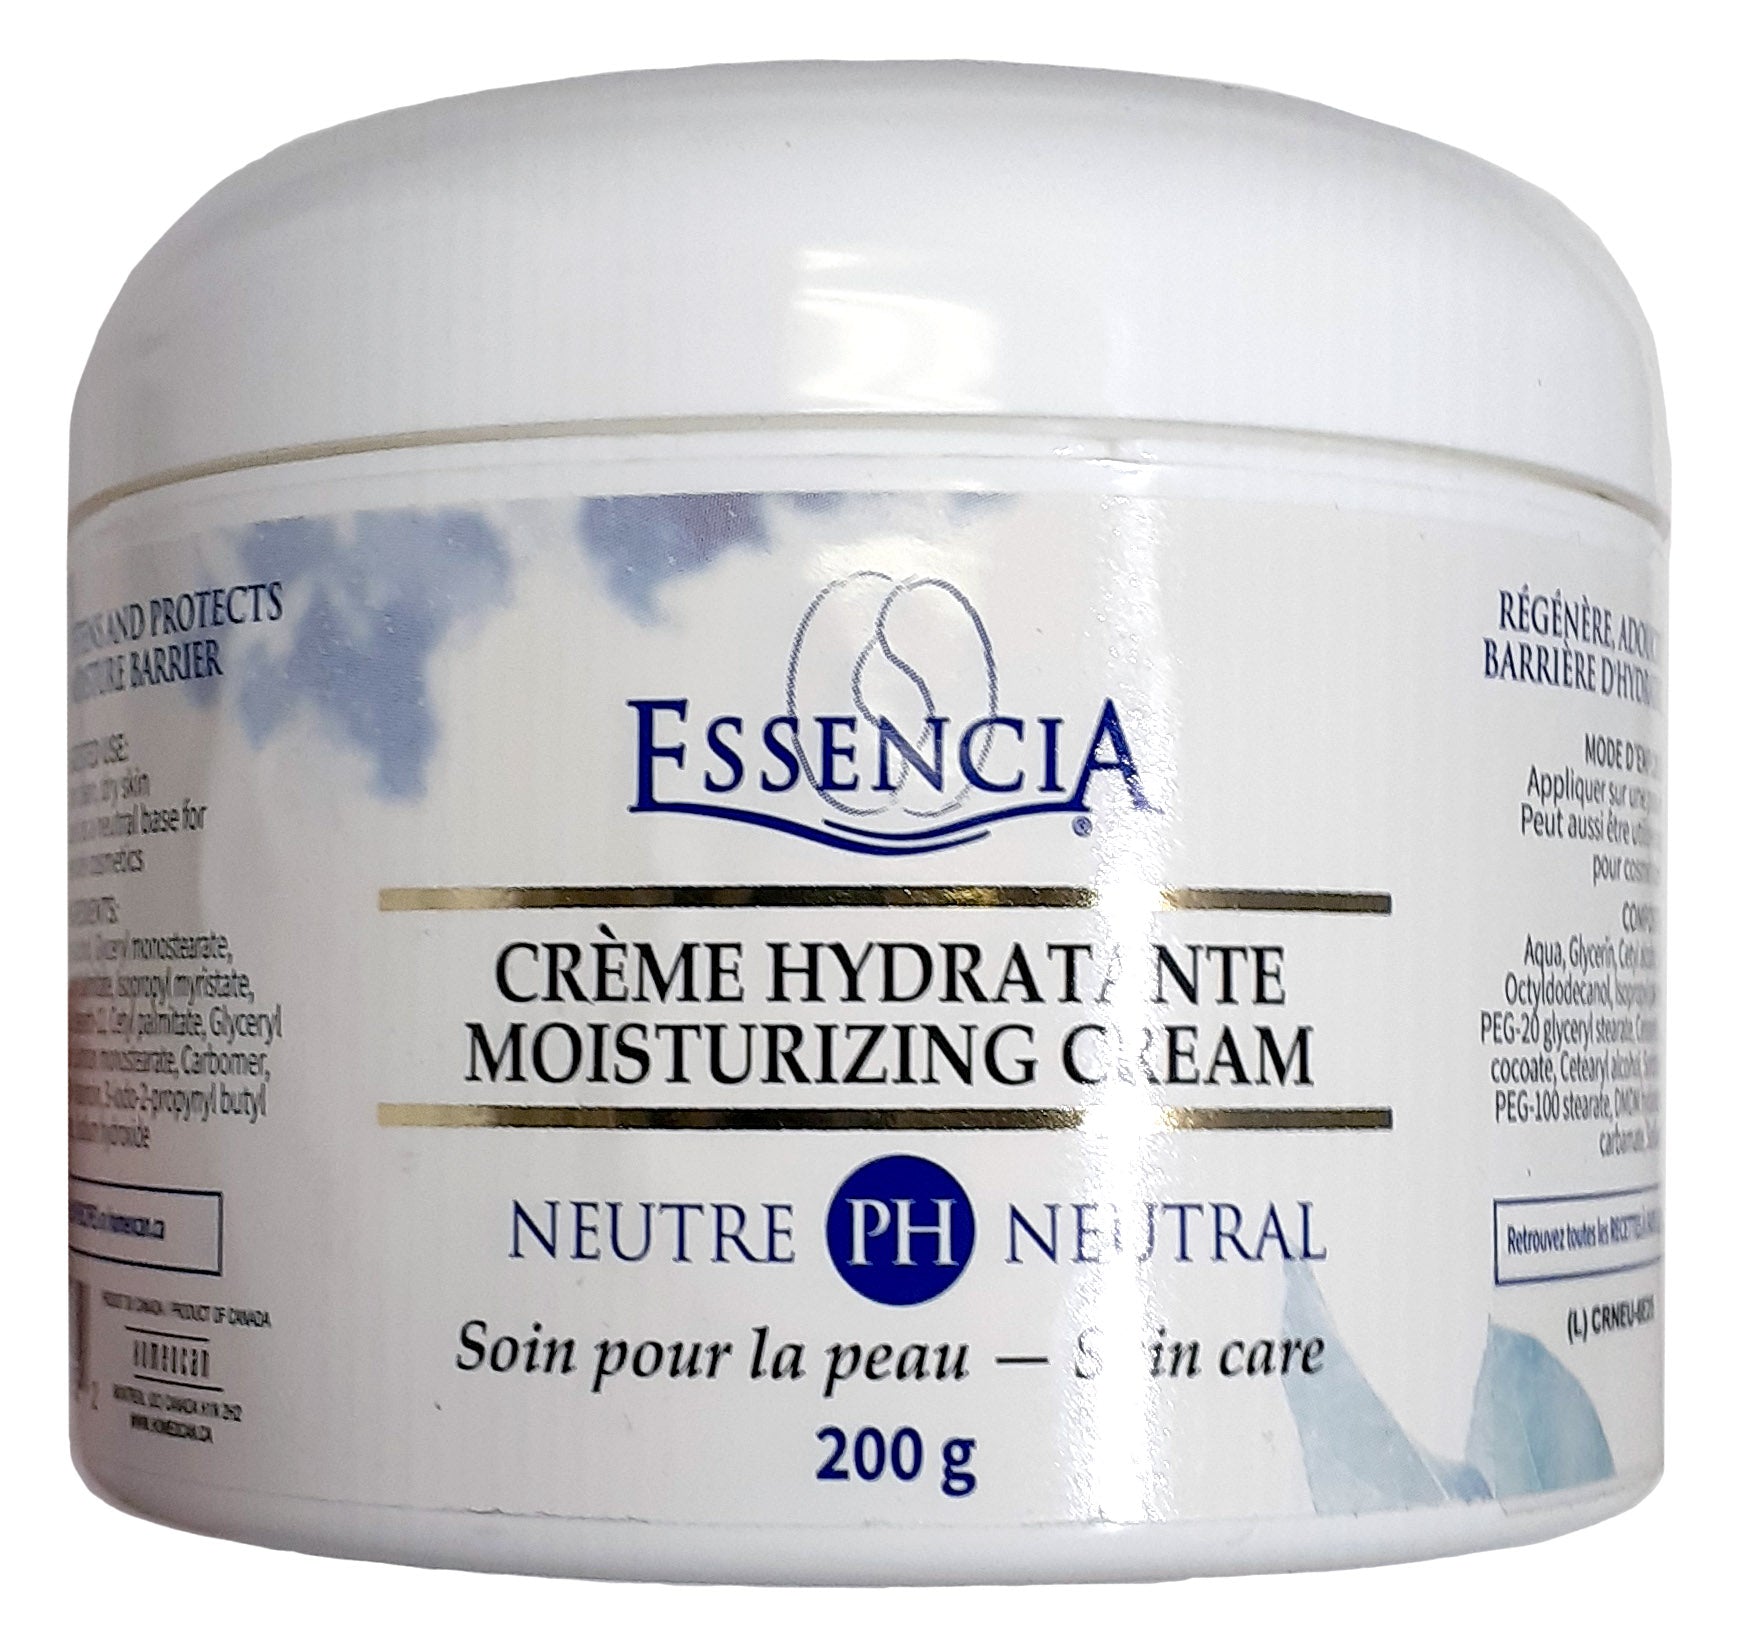 PH neutral moisturizing cream 200g